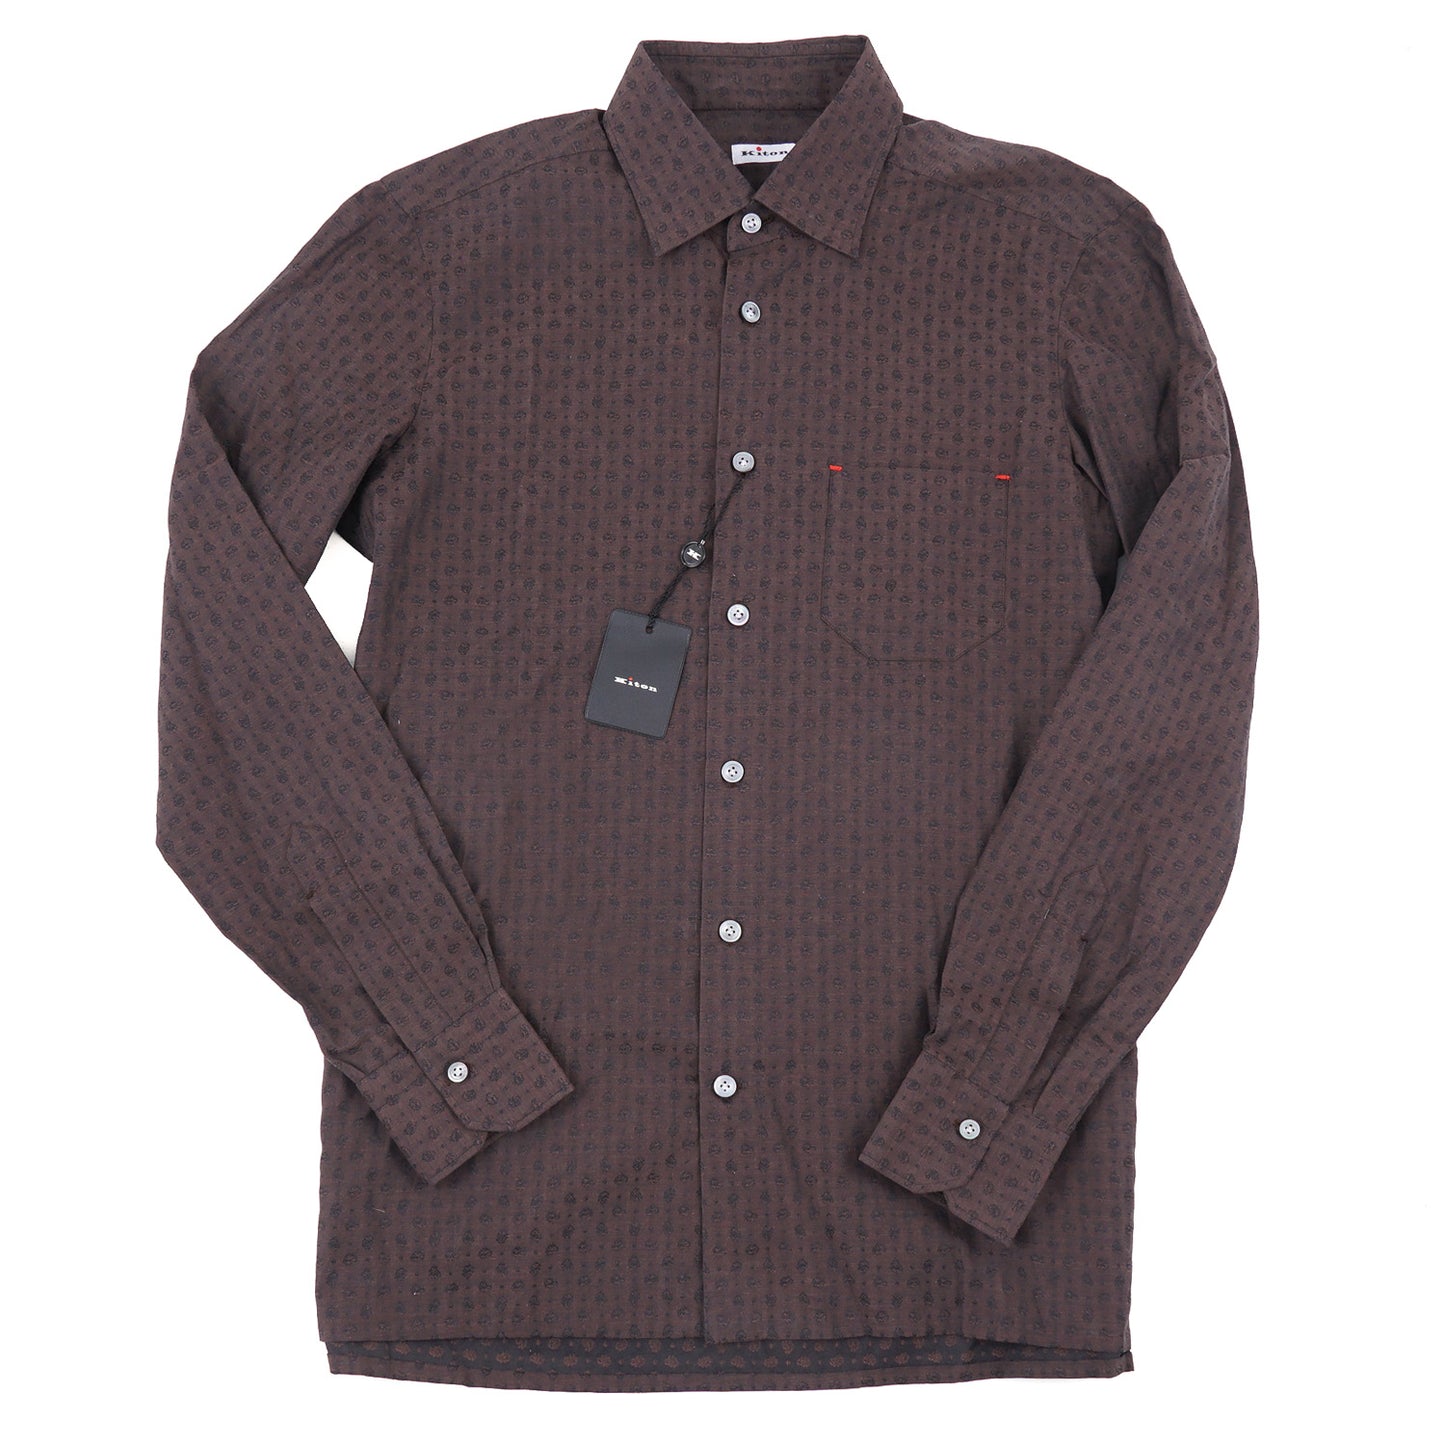 Kiton Slim-Fit Patterned Cotton Shirt - Top Shelf Apparel